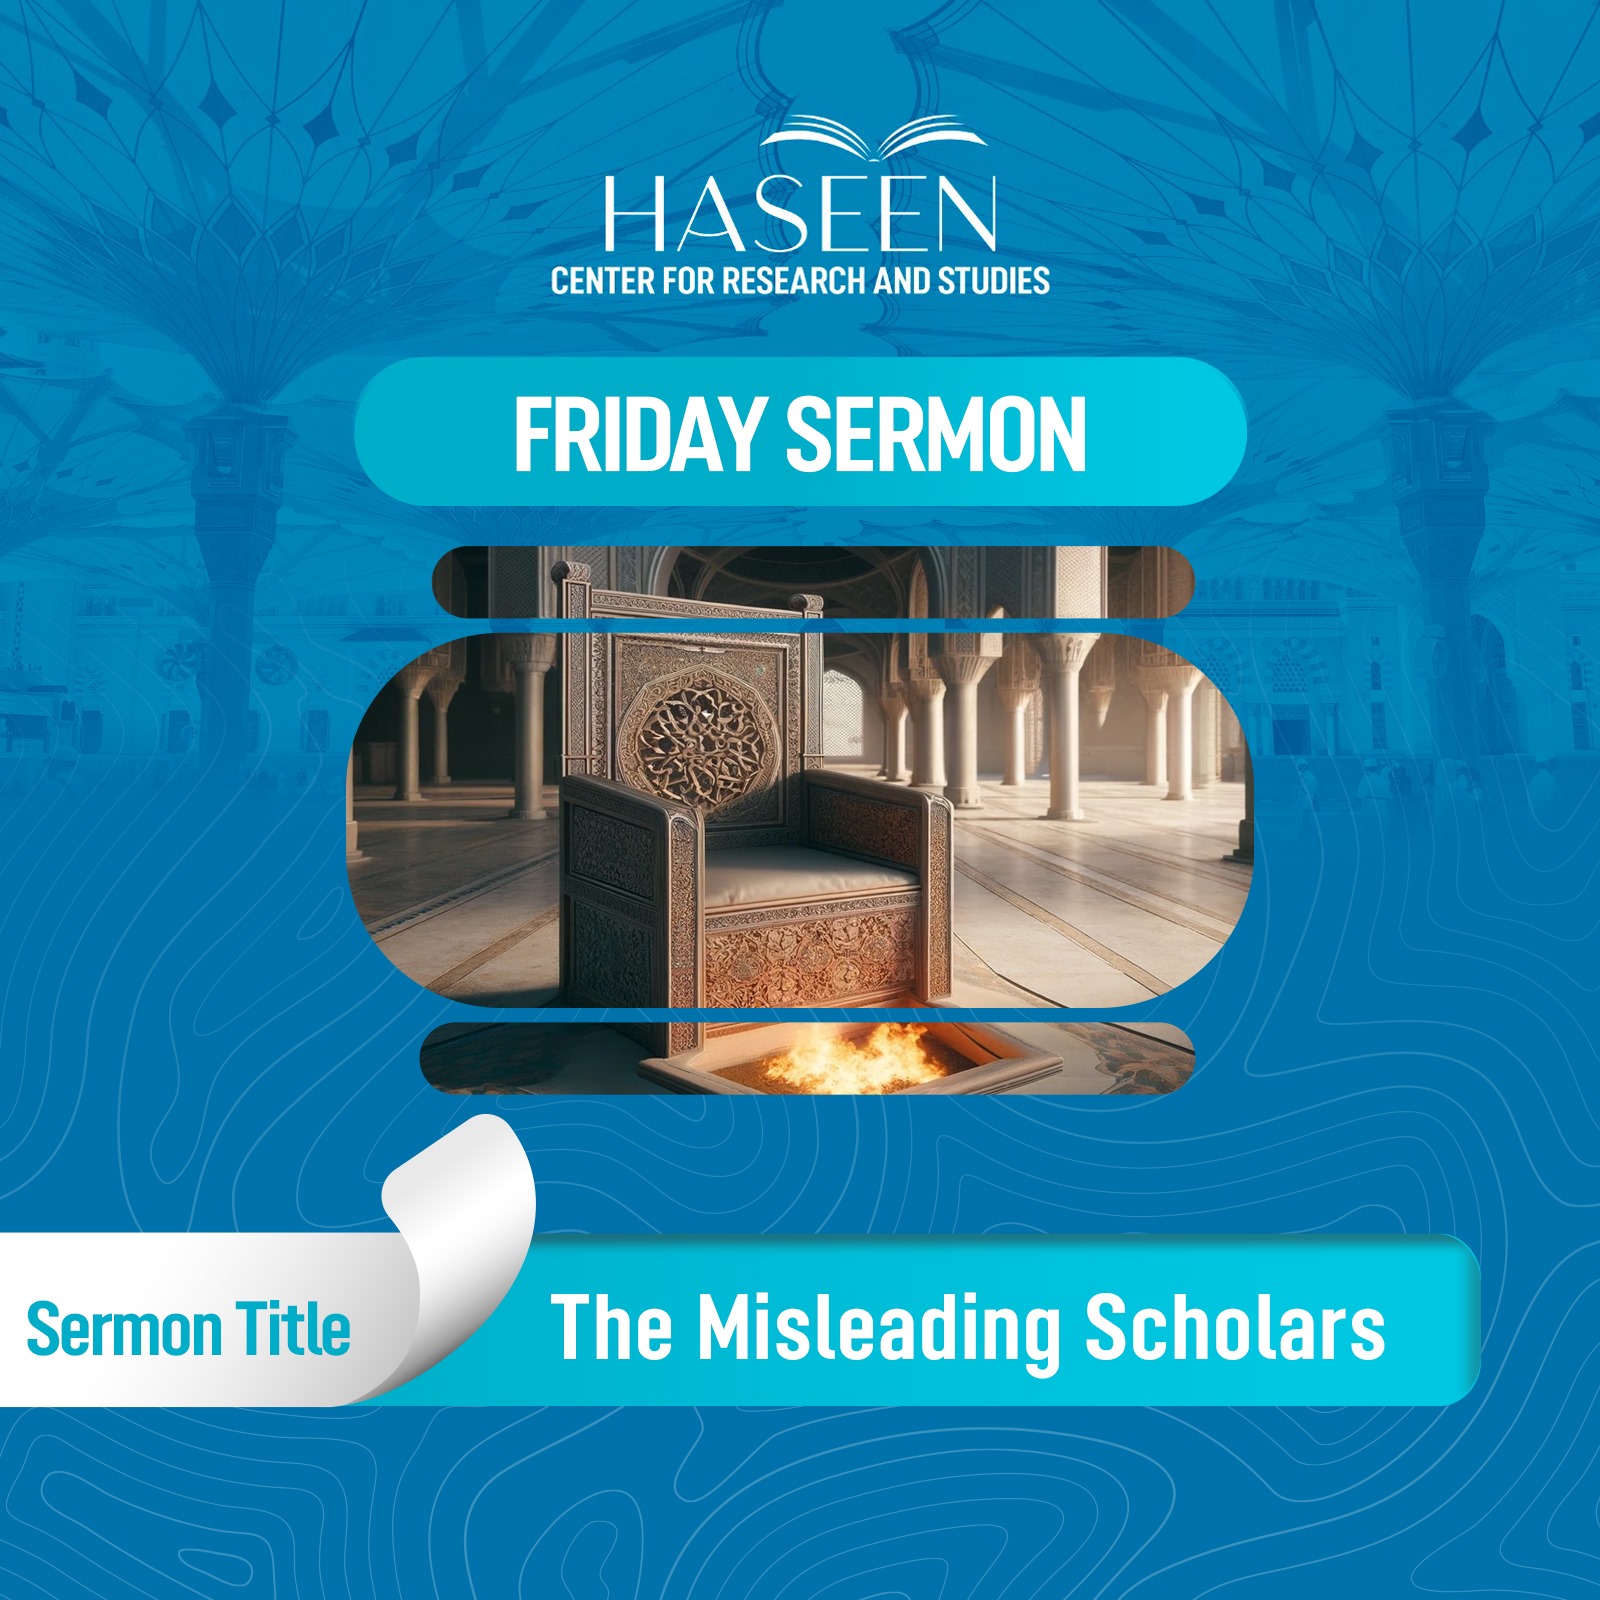 Title of Sermon: The Misleading Scholars